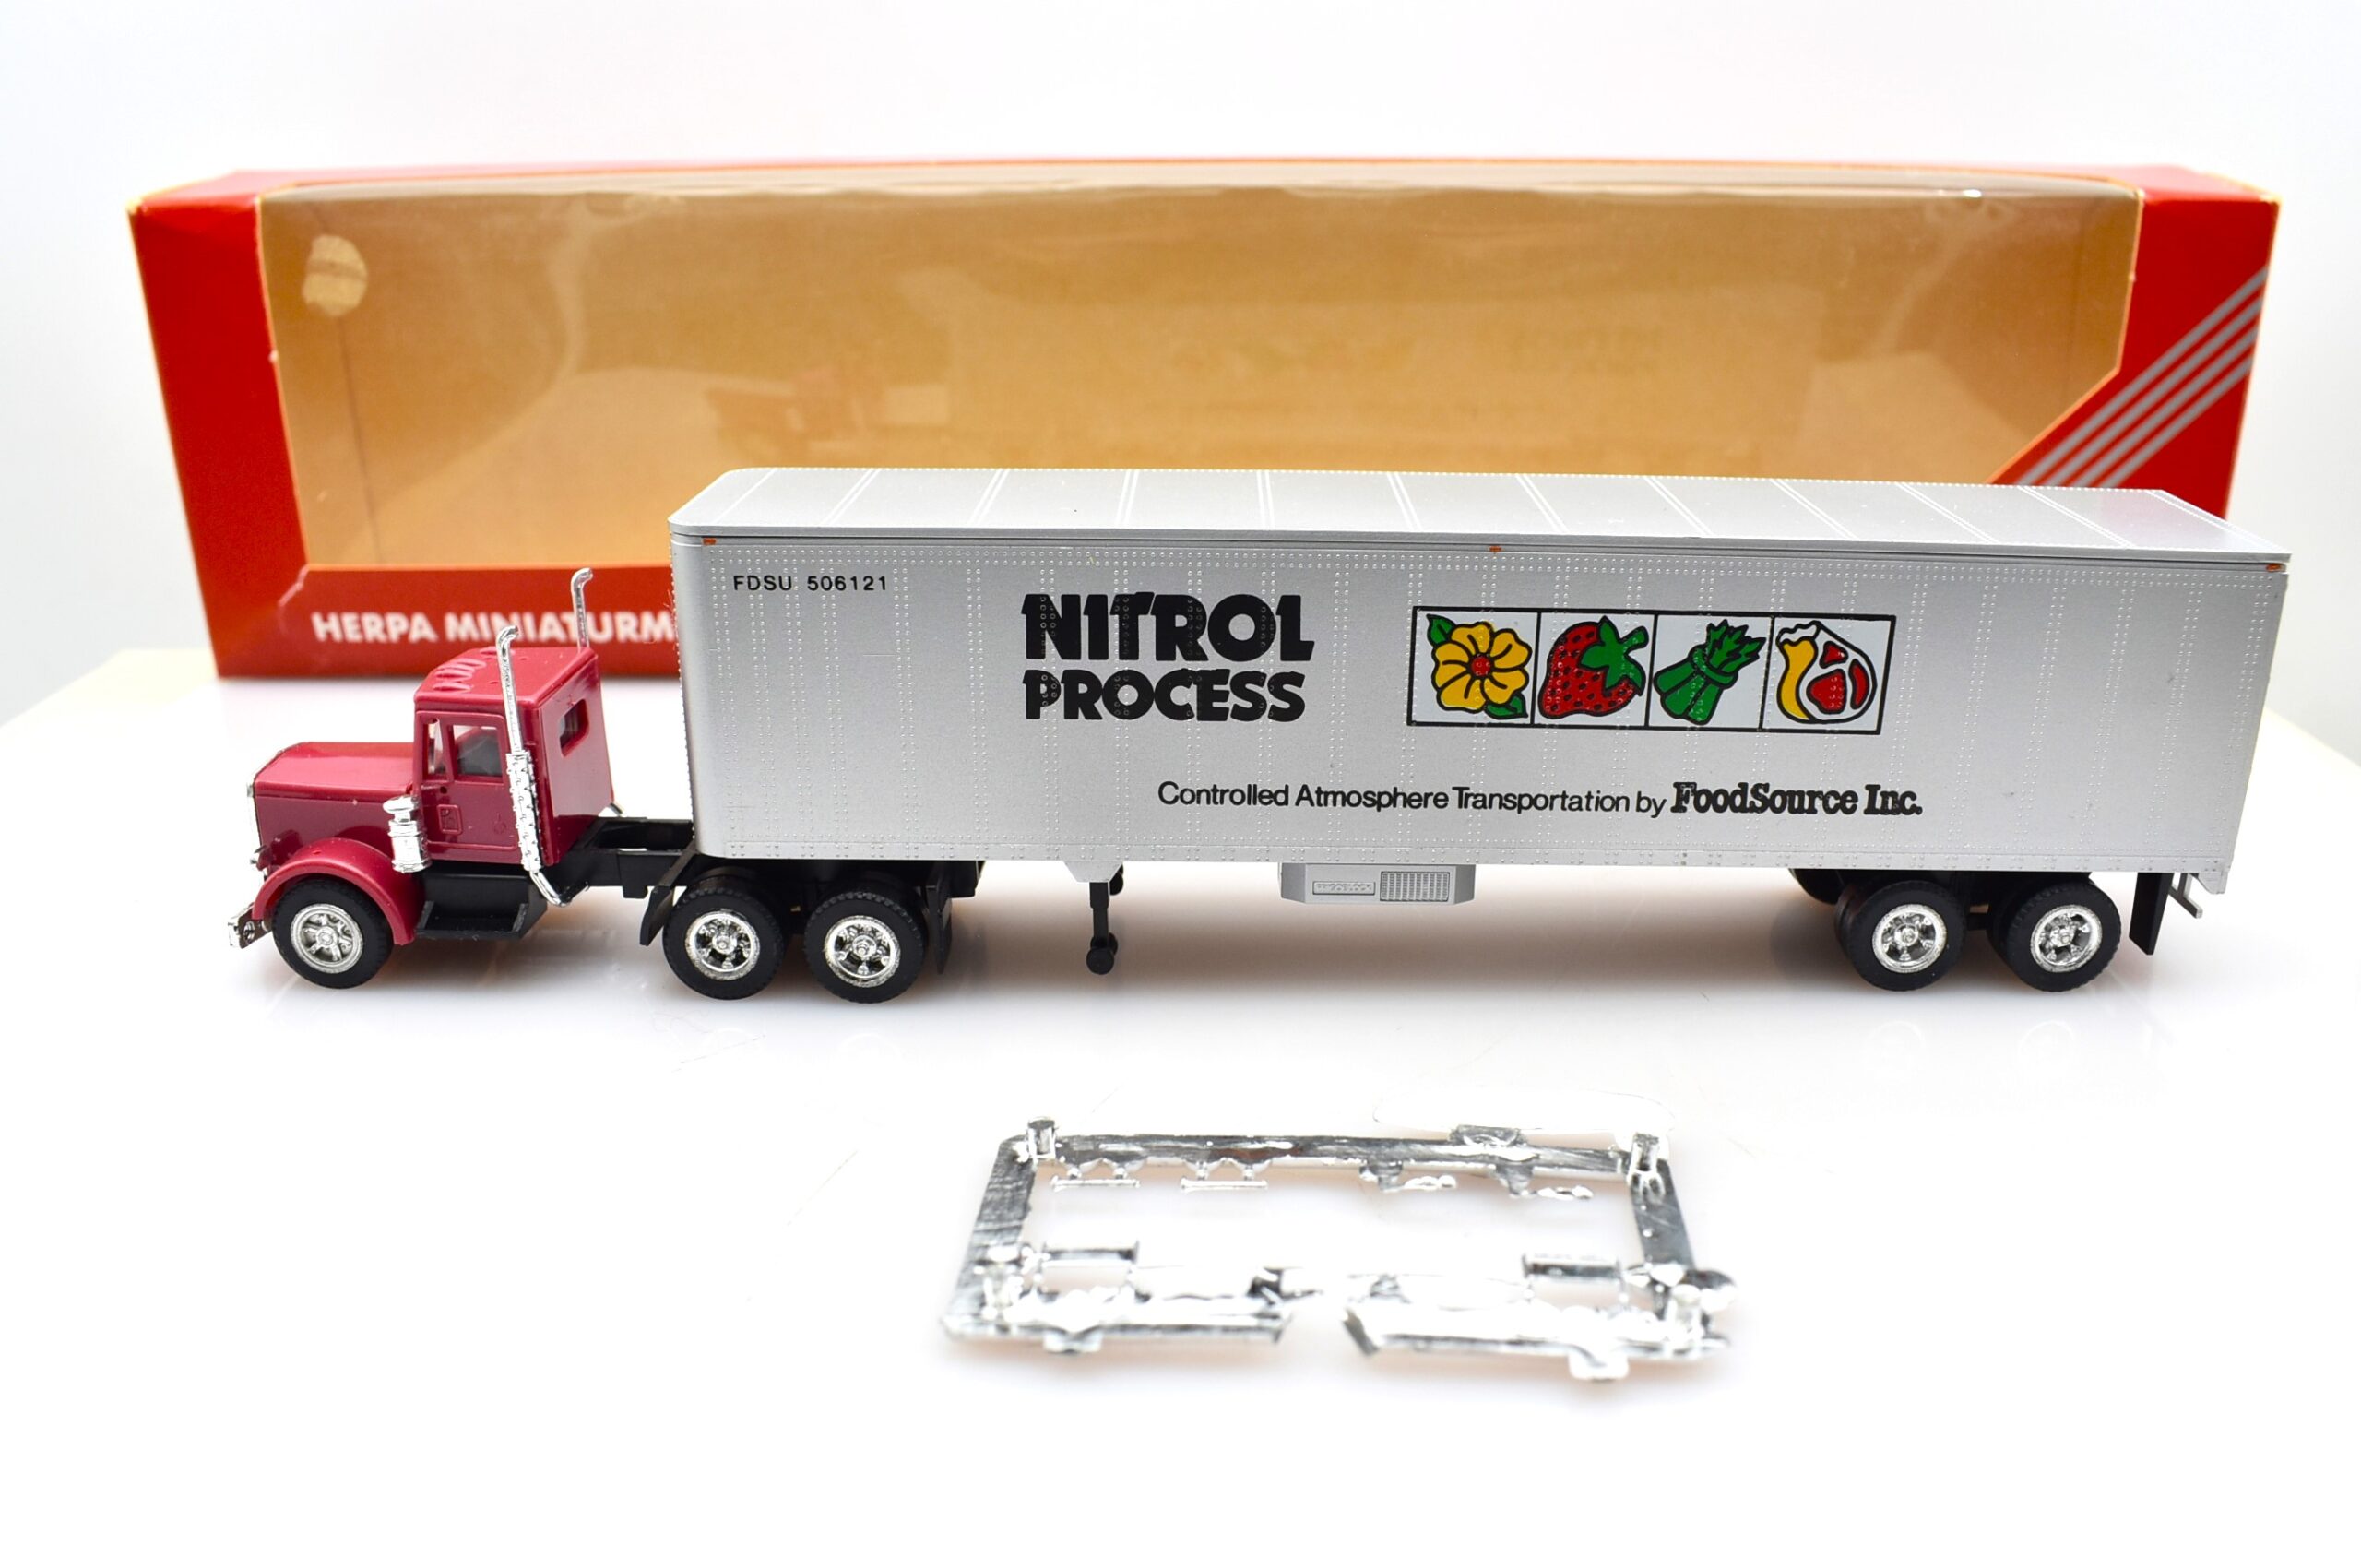 herpa model truck 1:87 scale truck Peterbilt Nitrol Process Food vehicles